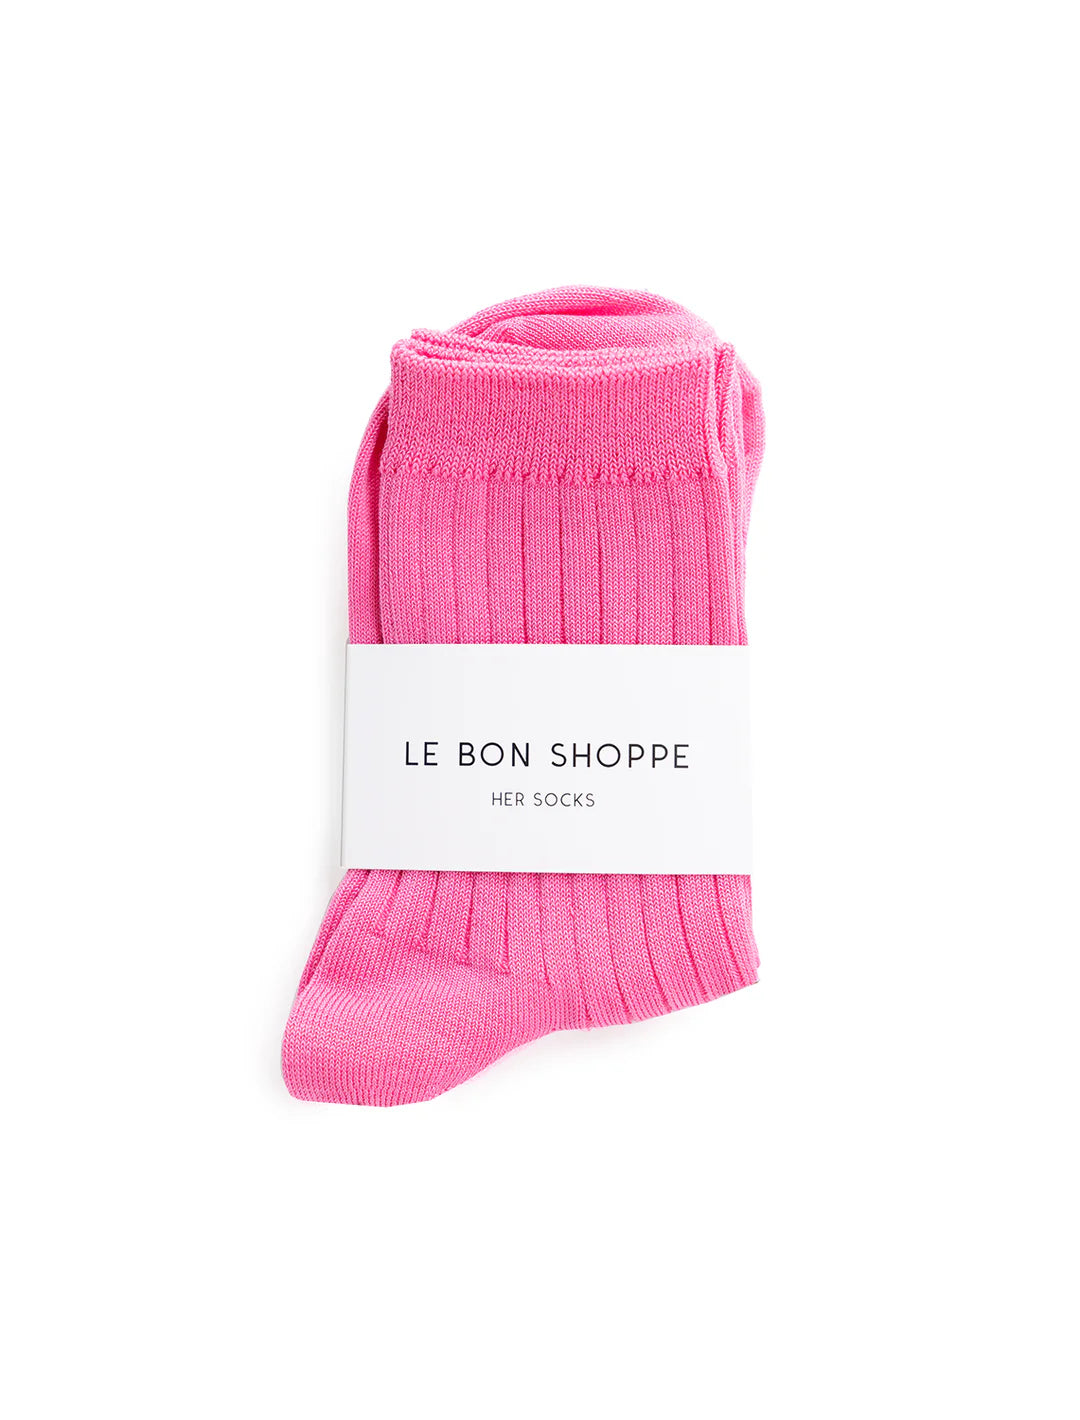 Her Socks - Bright Pink